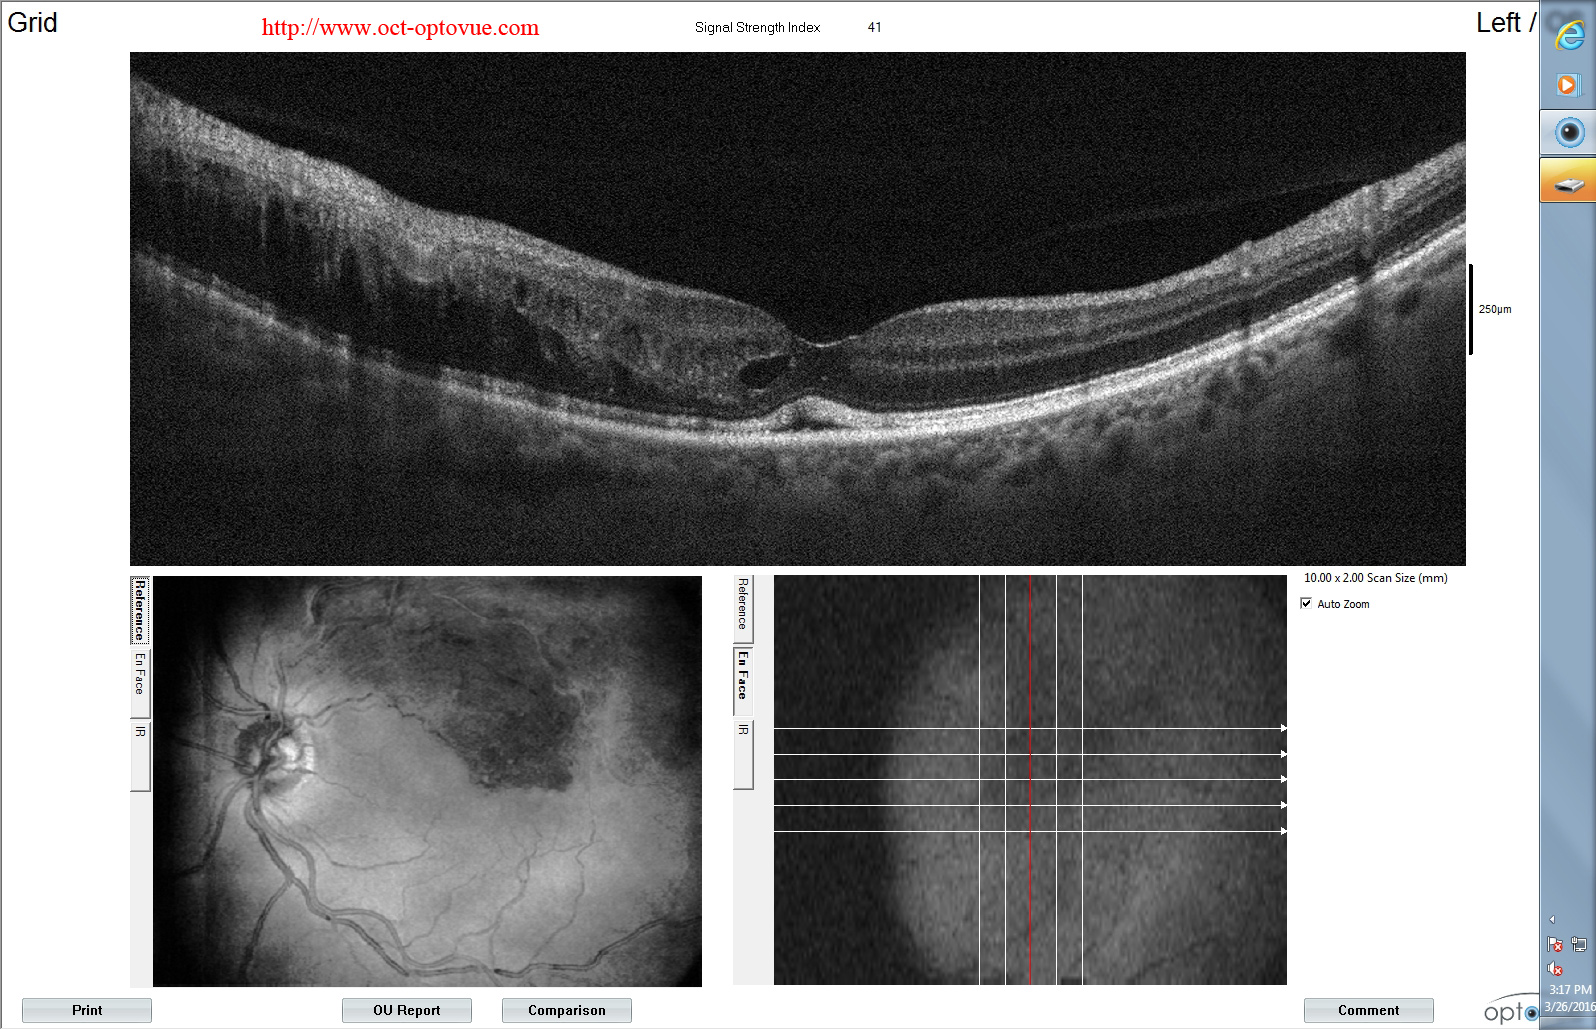 brvo oct retina optovue